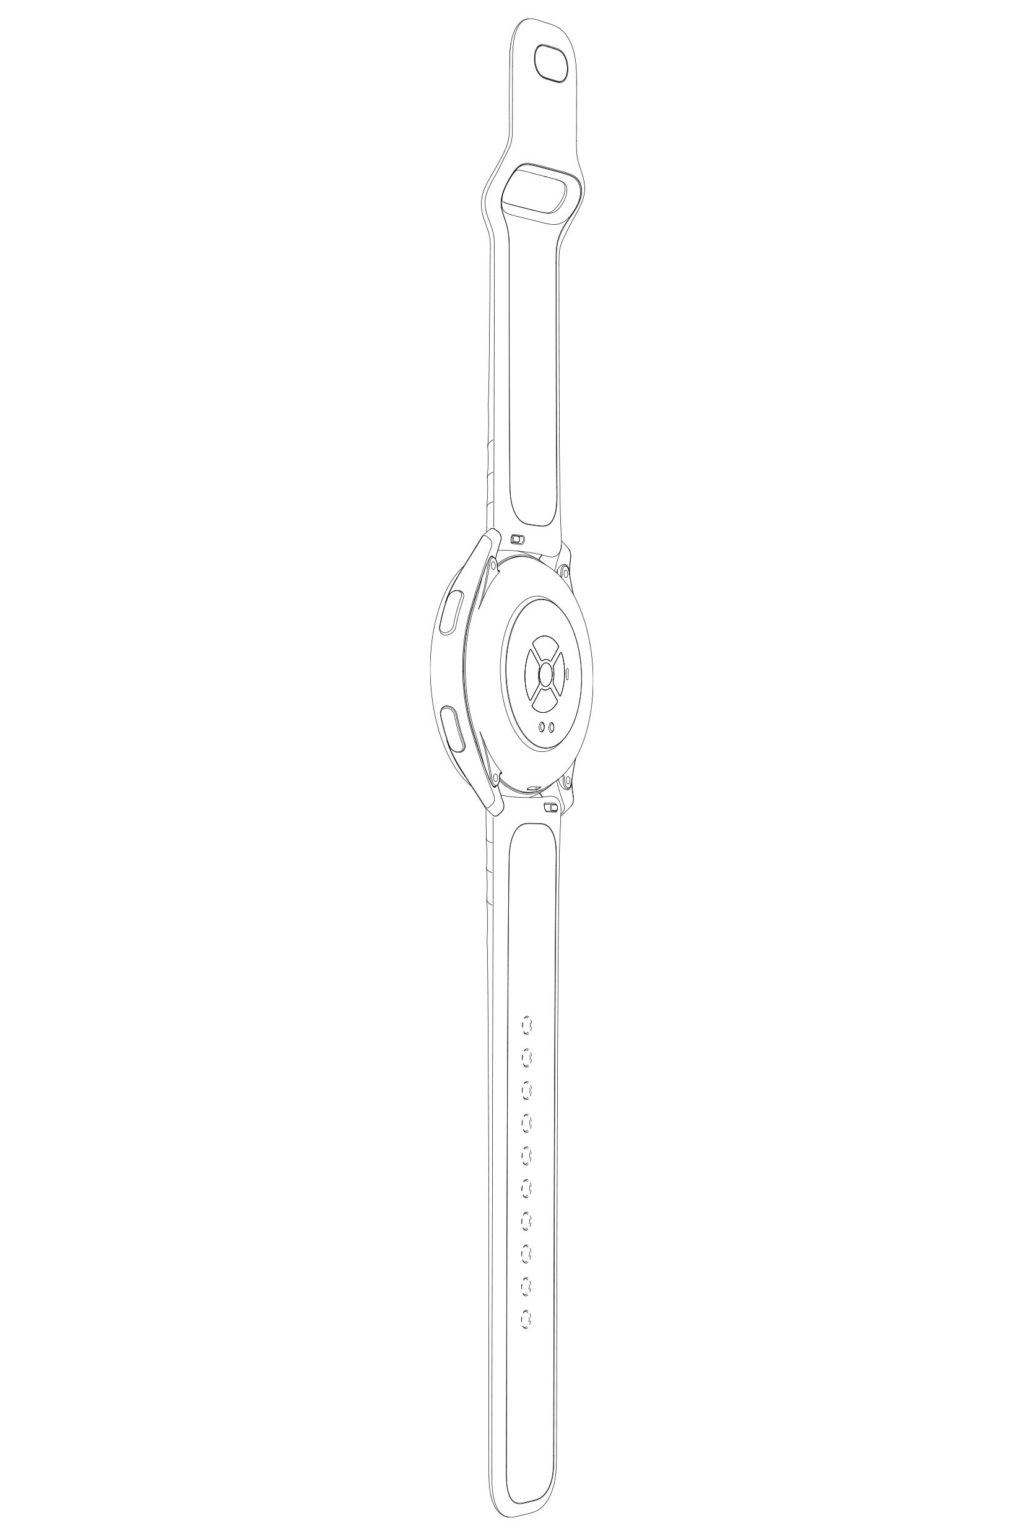 oneplus-watch-sport-patent-4-1024x1536.jpg